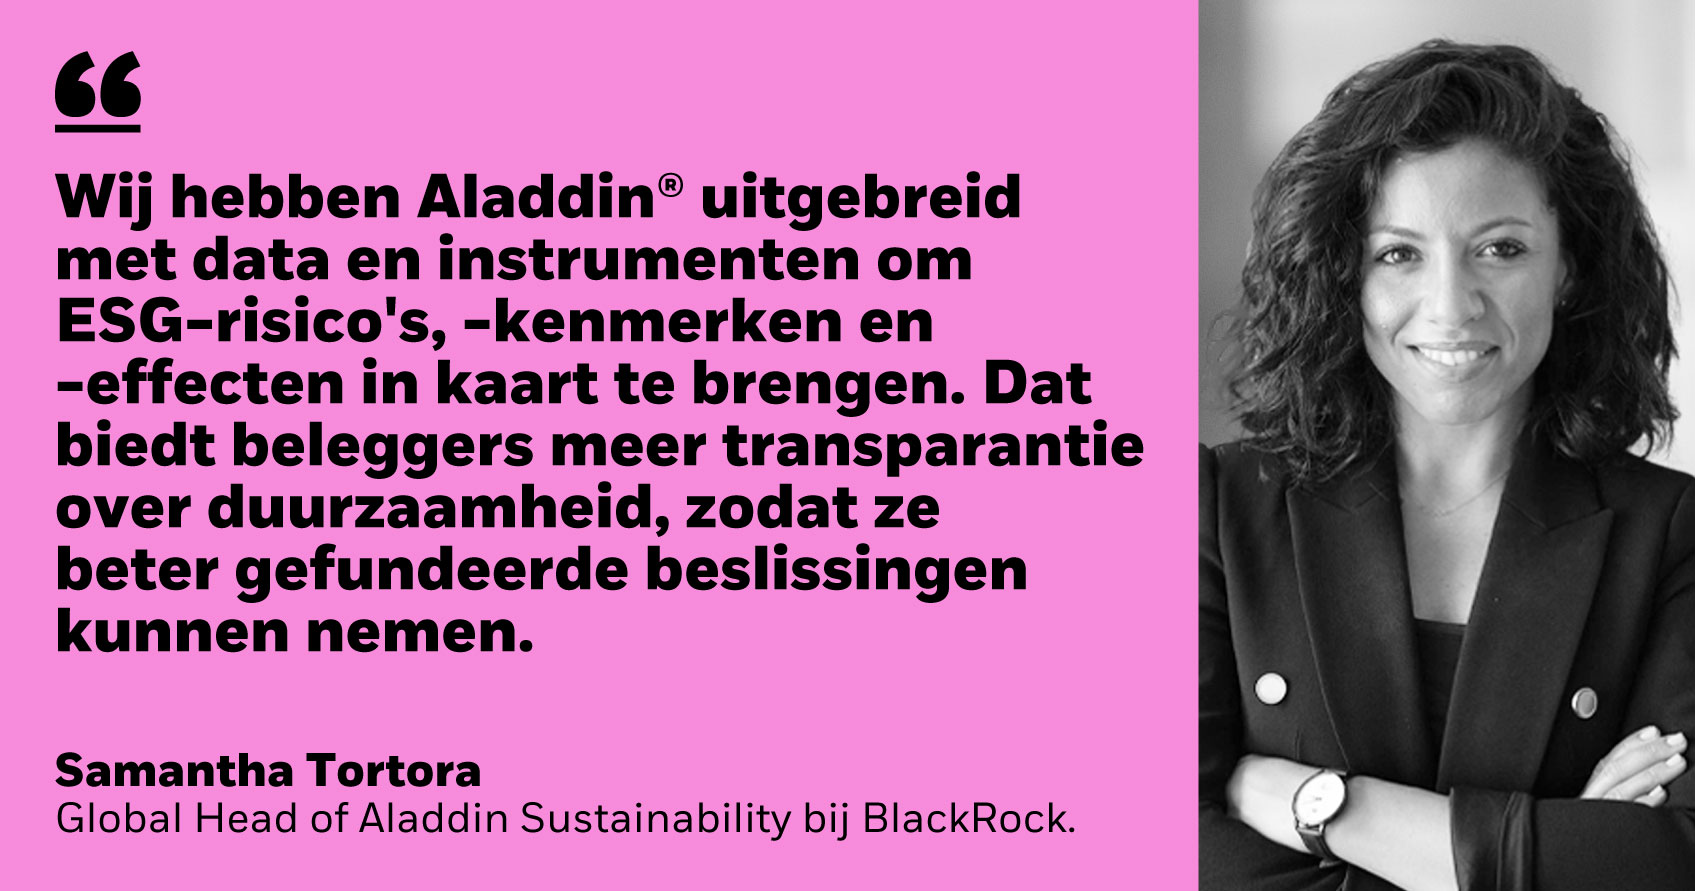 Samantha Tortora, Global Head of Aladdin Sustainability bij BlackRock